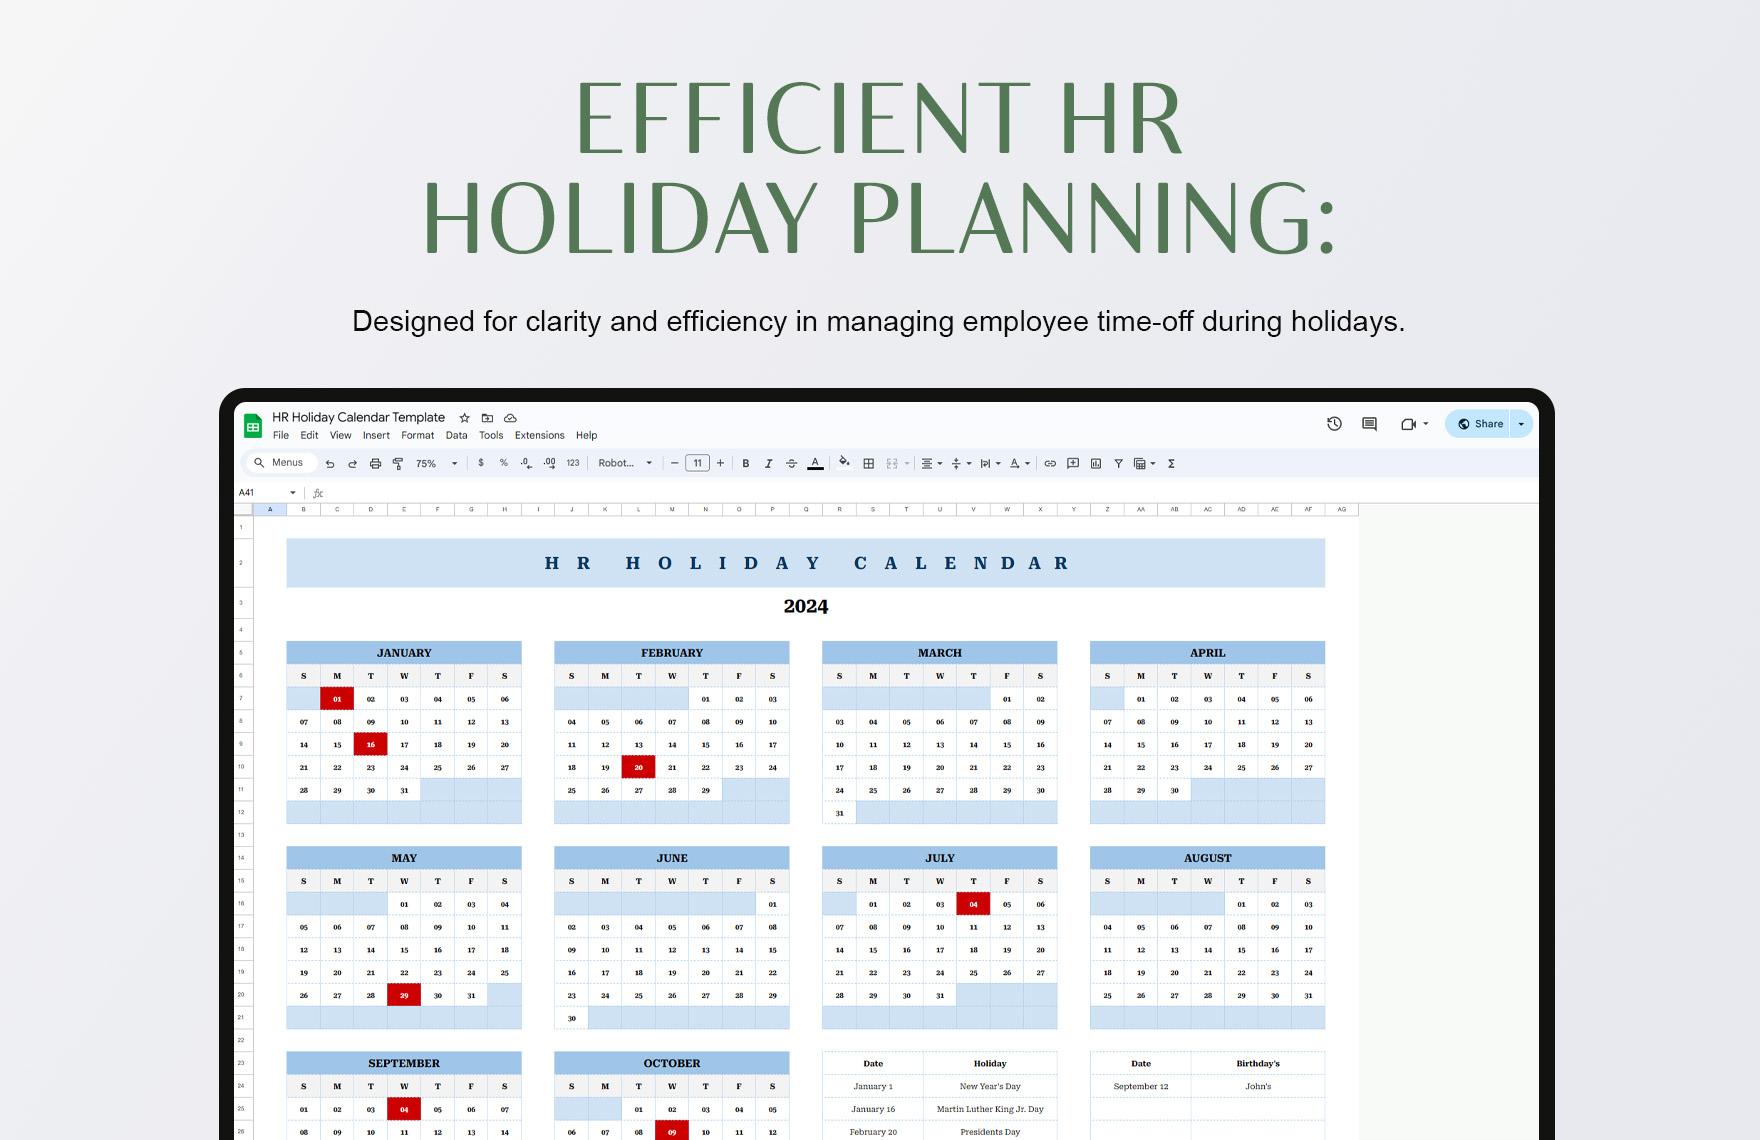 HR Holiday Calendar Template